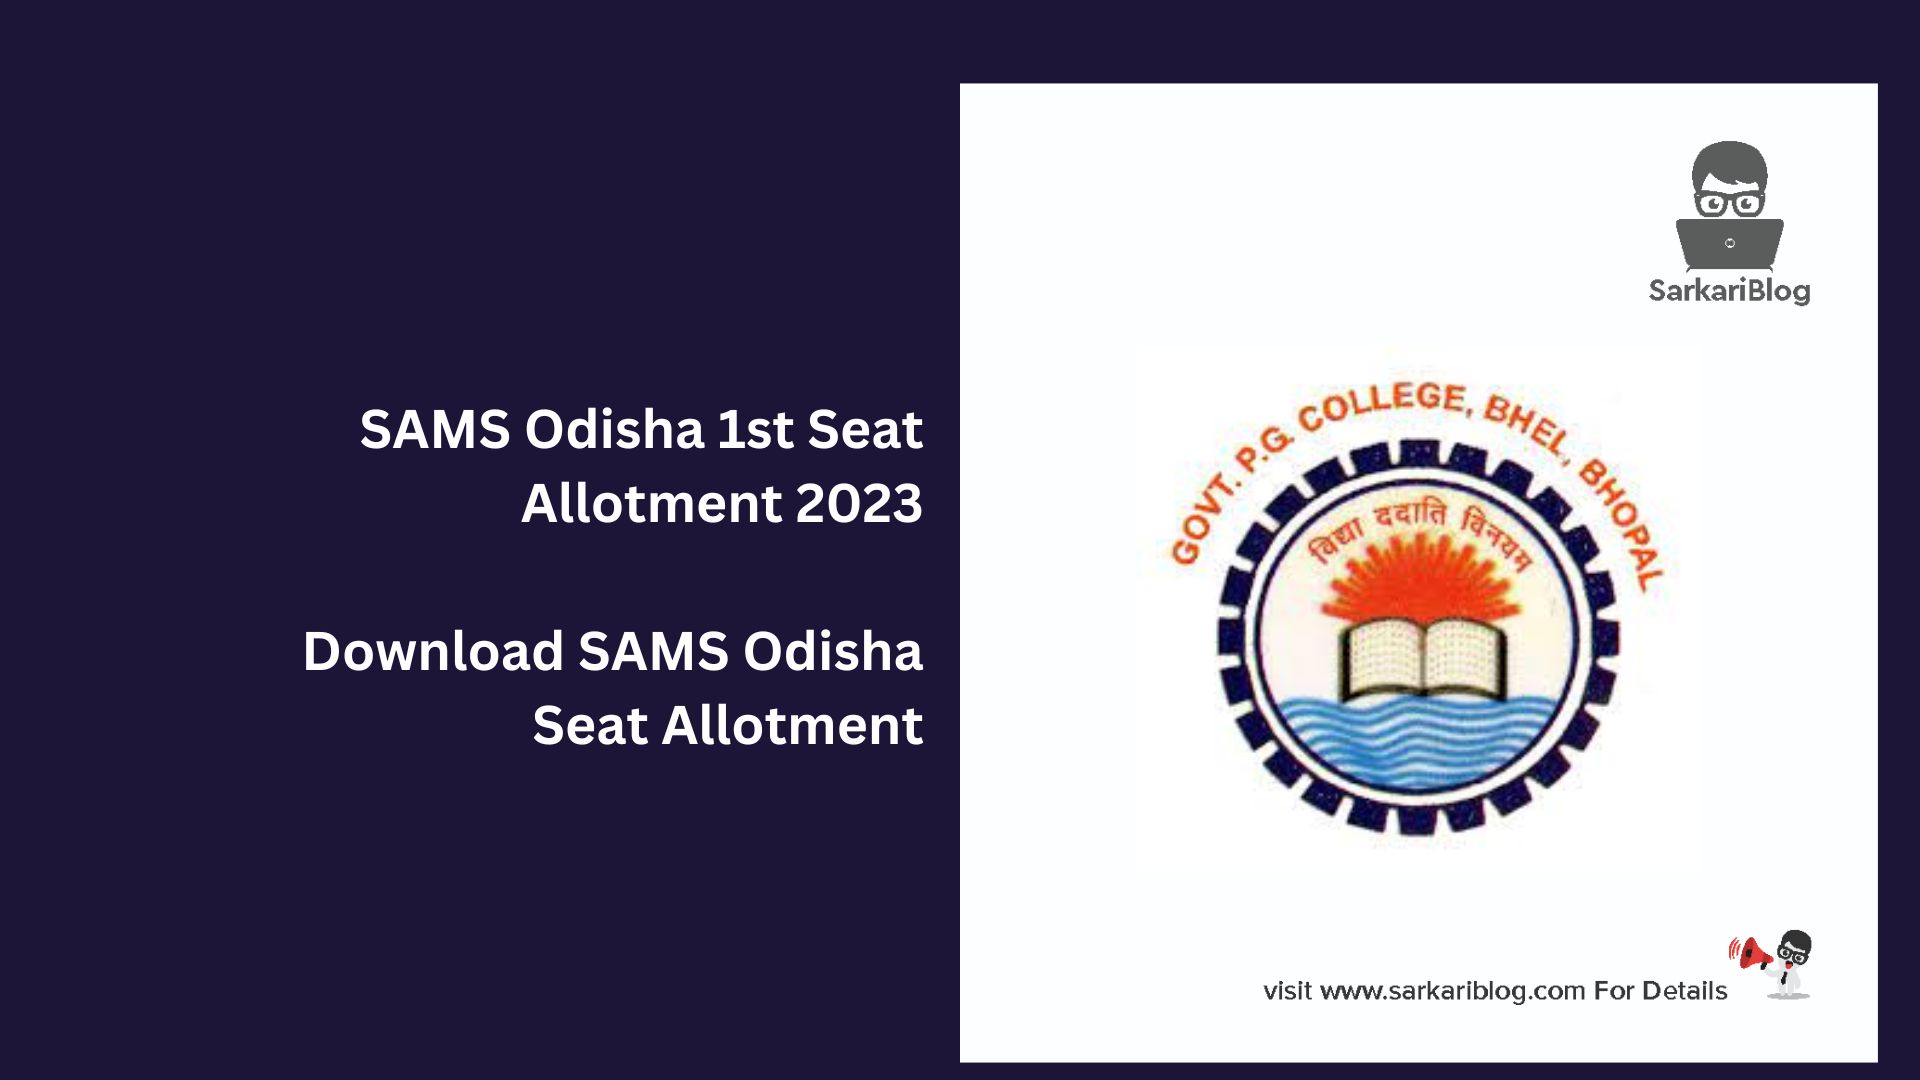 SAMS Odisha 1st Seat Allotment 2023